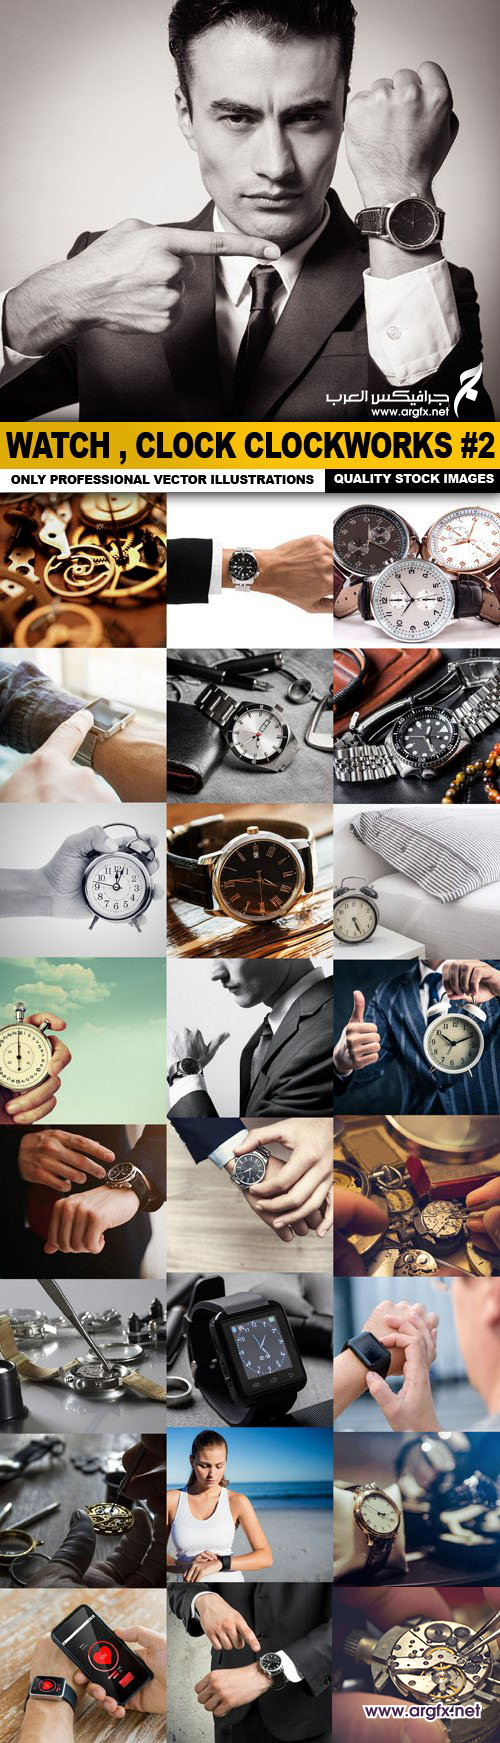 Watch , Clock Clockworks #2 - 25 HQ Images